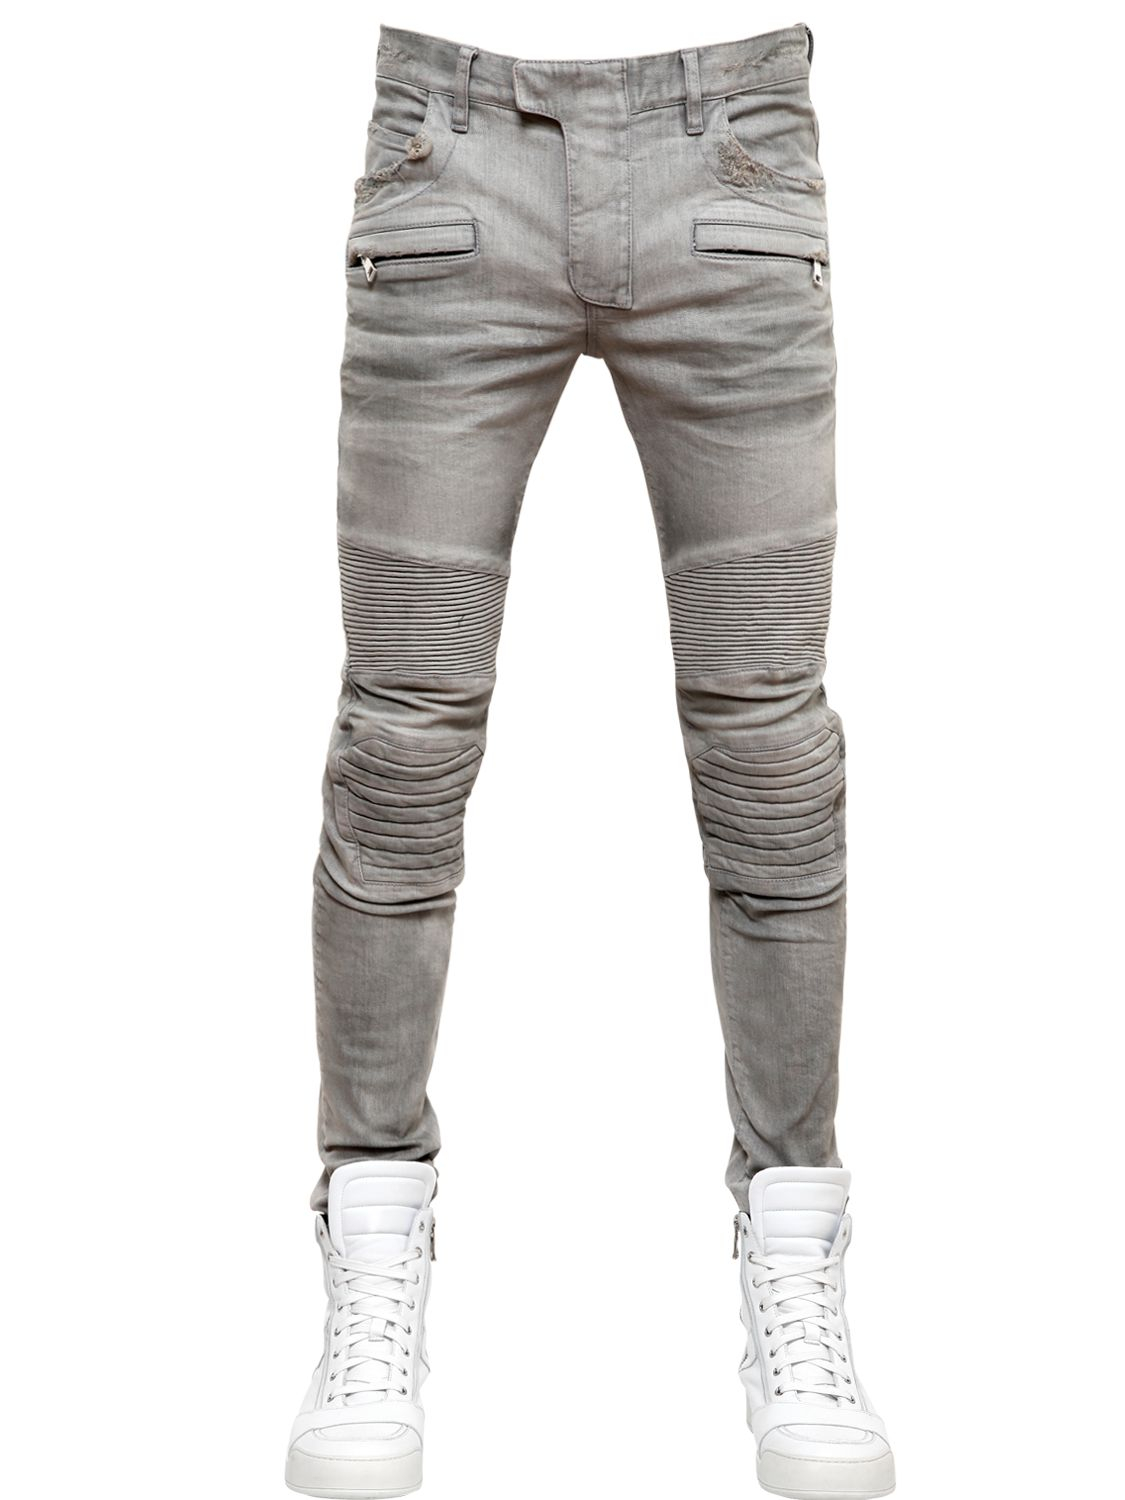 Gray Jeans United Kingdom, SAVE 40% mpgc.net